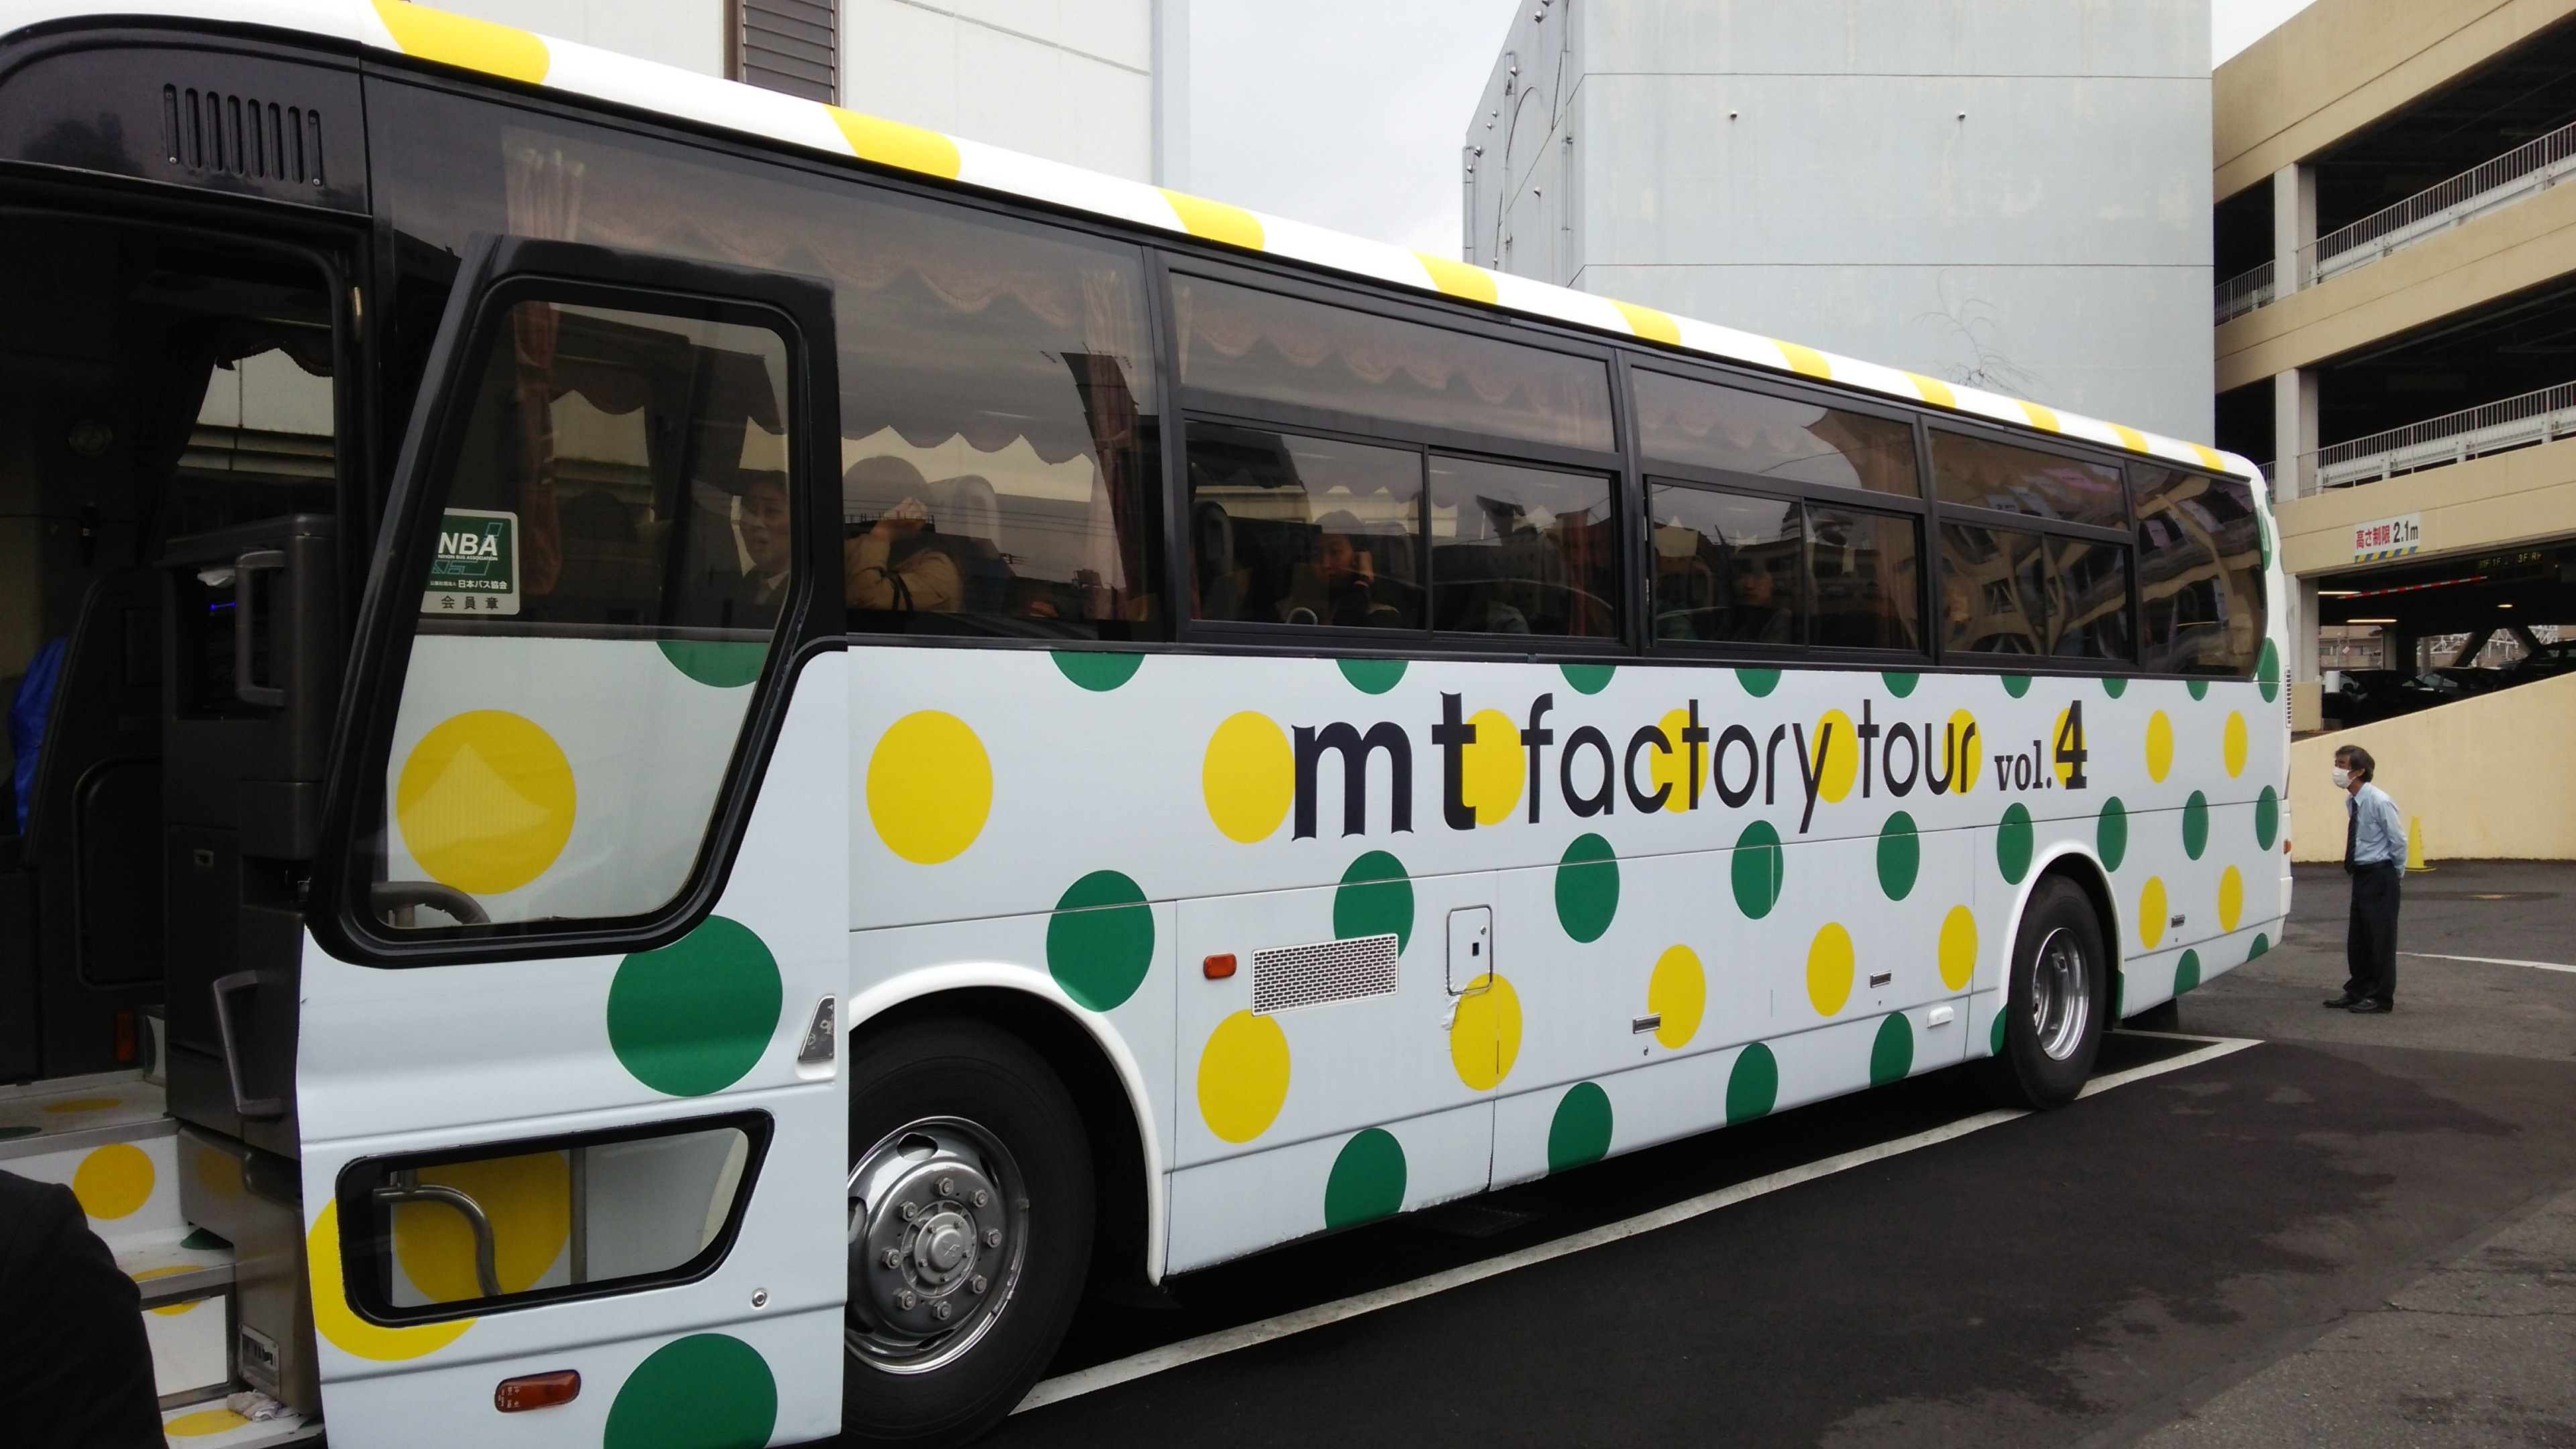 mt factory tour：マスキングテープの工場見学 « 白数デンタルオフィス